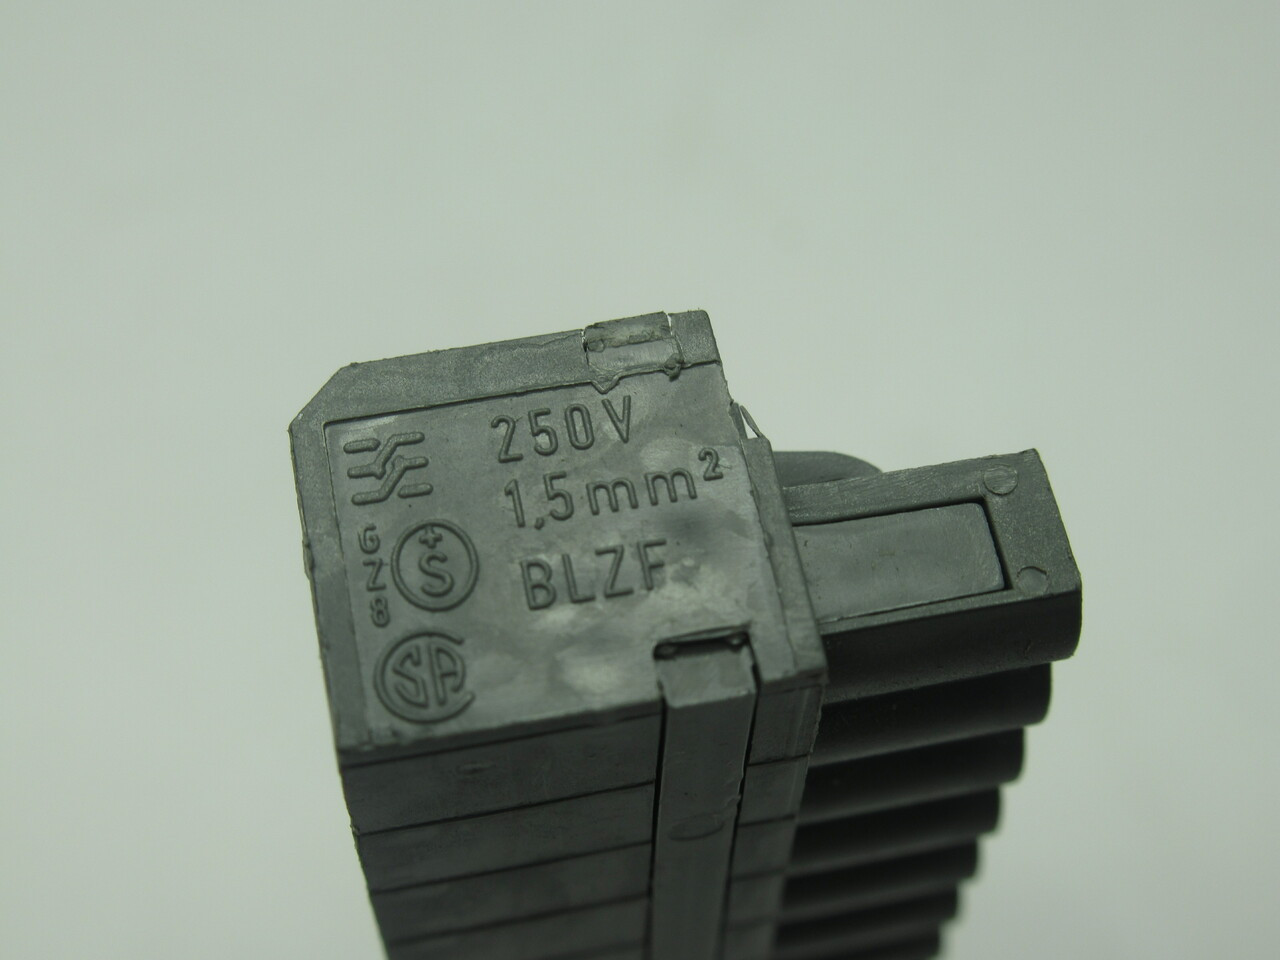 Weidmuller BLZF1.5/5.08-20 PCB Terminal Block 20Pos 250V 1.5mm2 GRAY USED